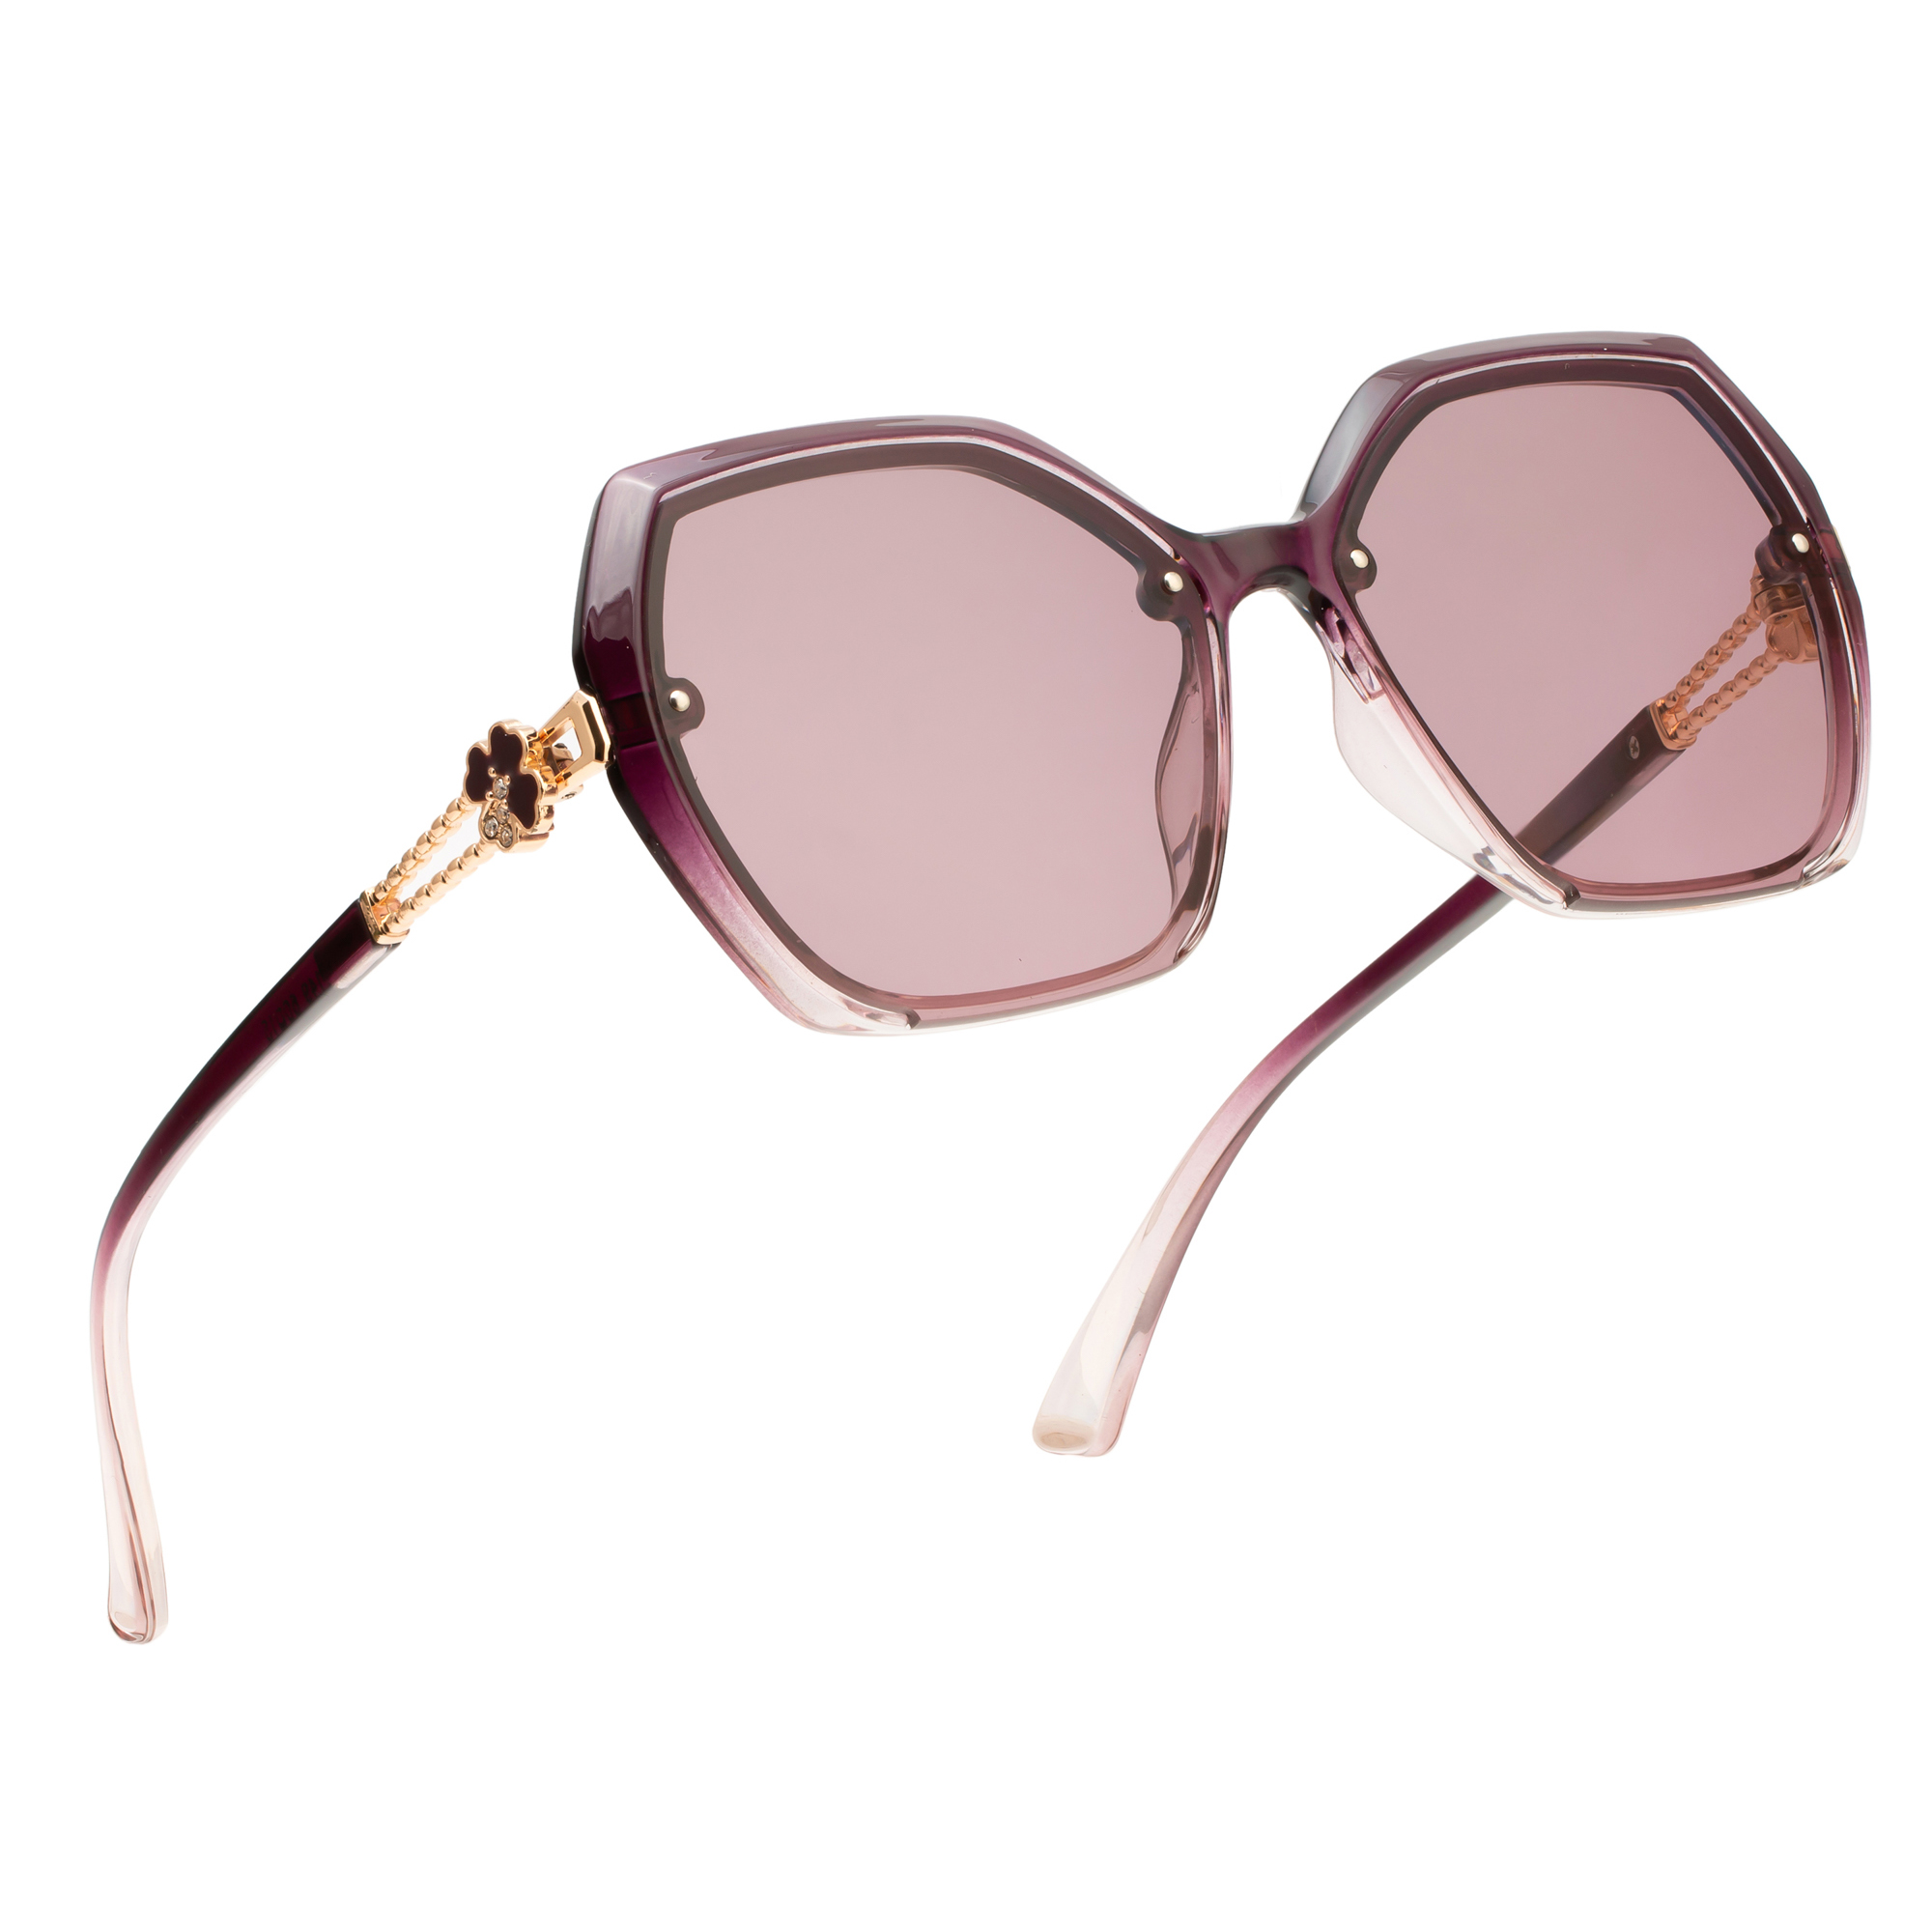 Buy HASHTAG EYEWEAR UV Protected Sunglasses| Fashionable Stylish Sunglases|  Trendy Designer Women's Sunglasses | Goggles for Women (B85-61, Black) at  Amazon.in